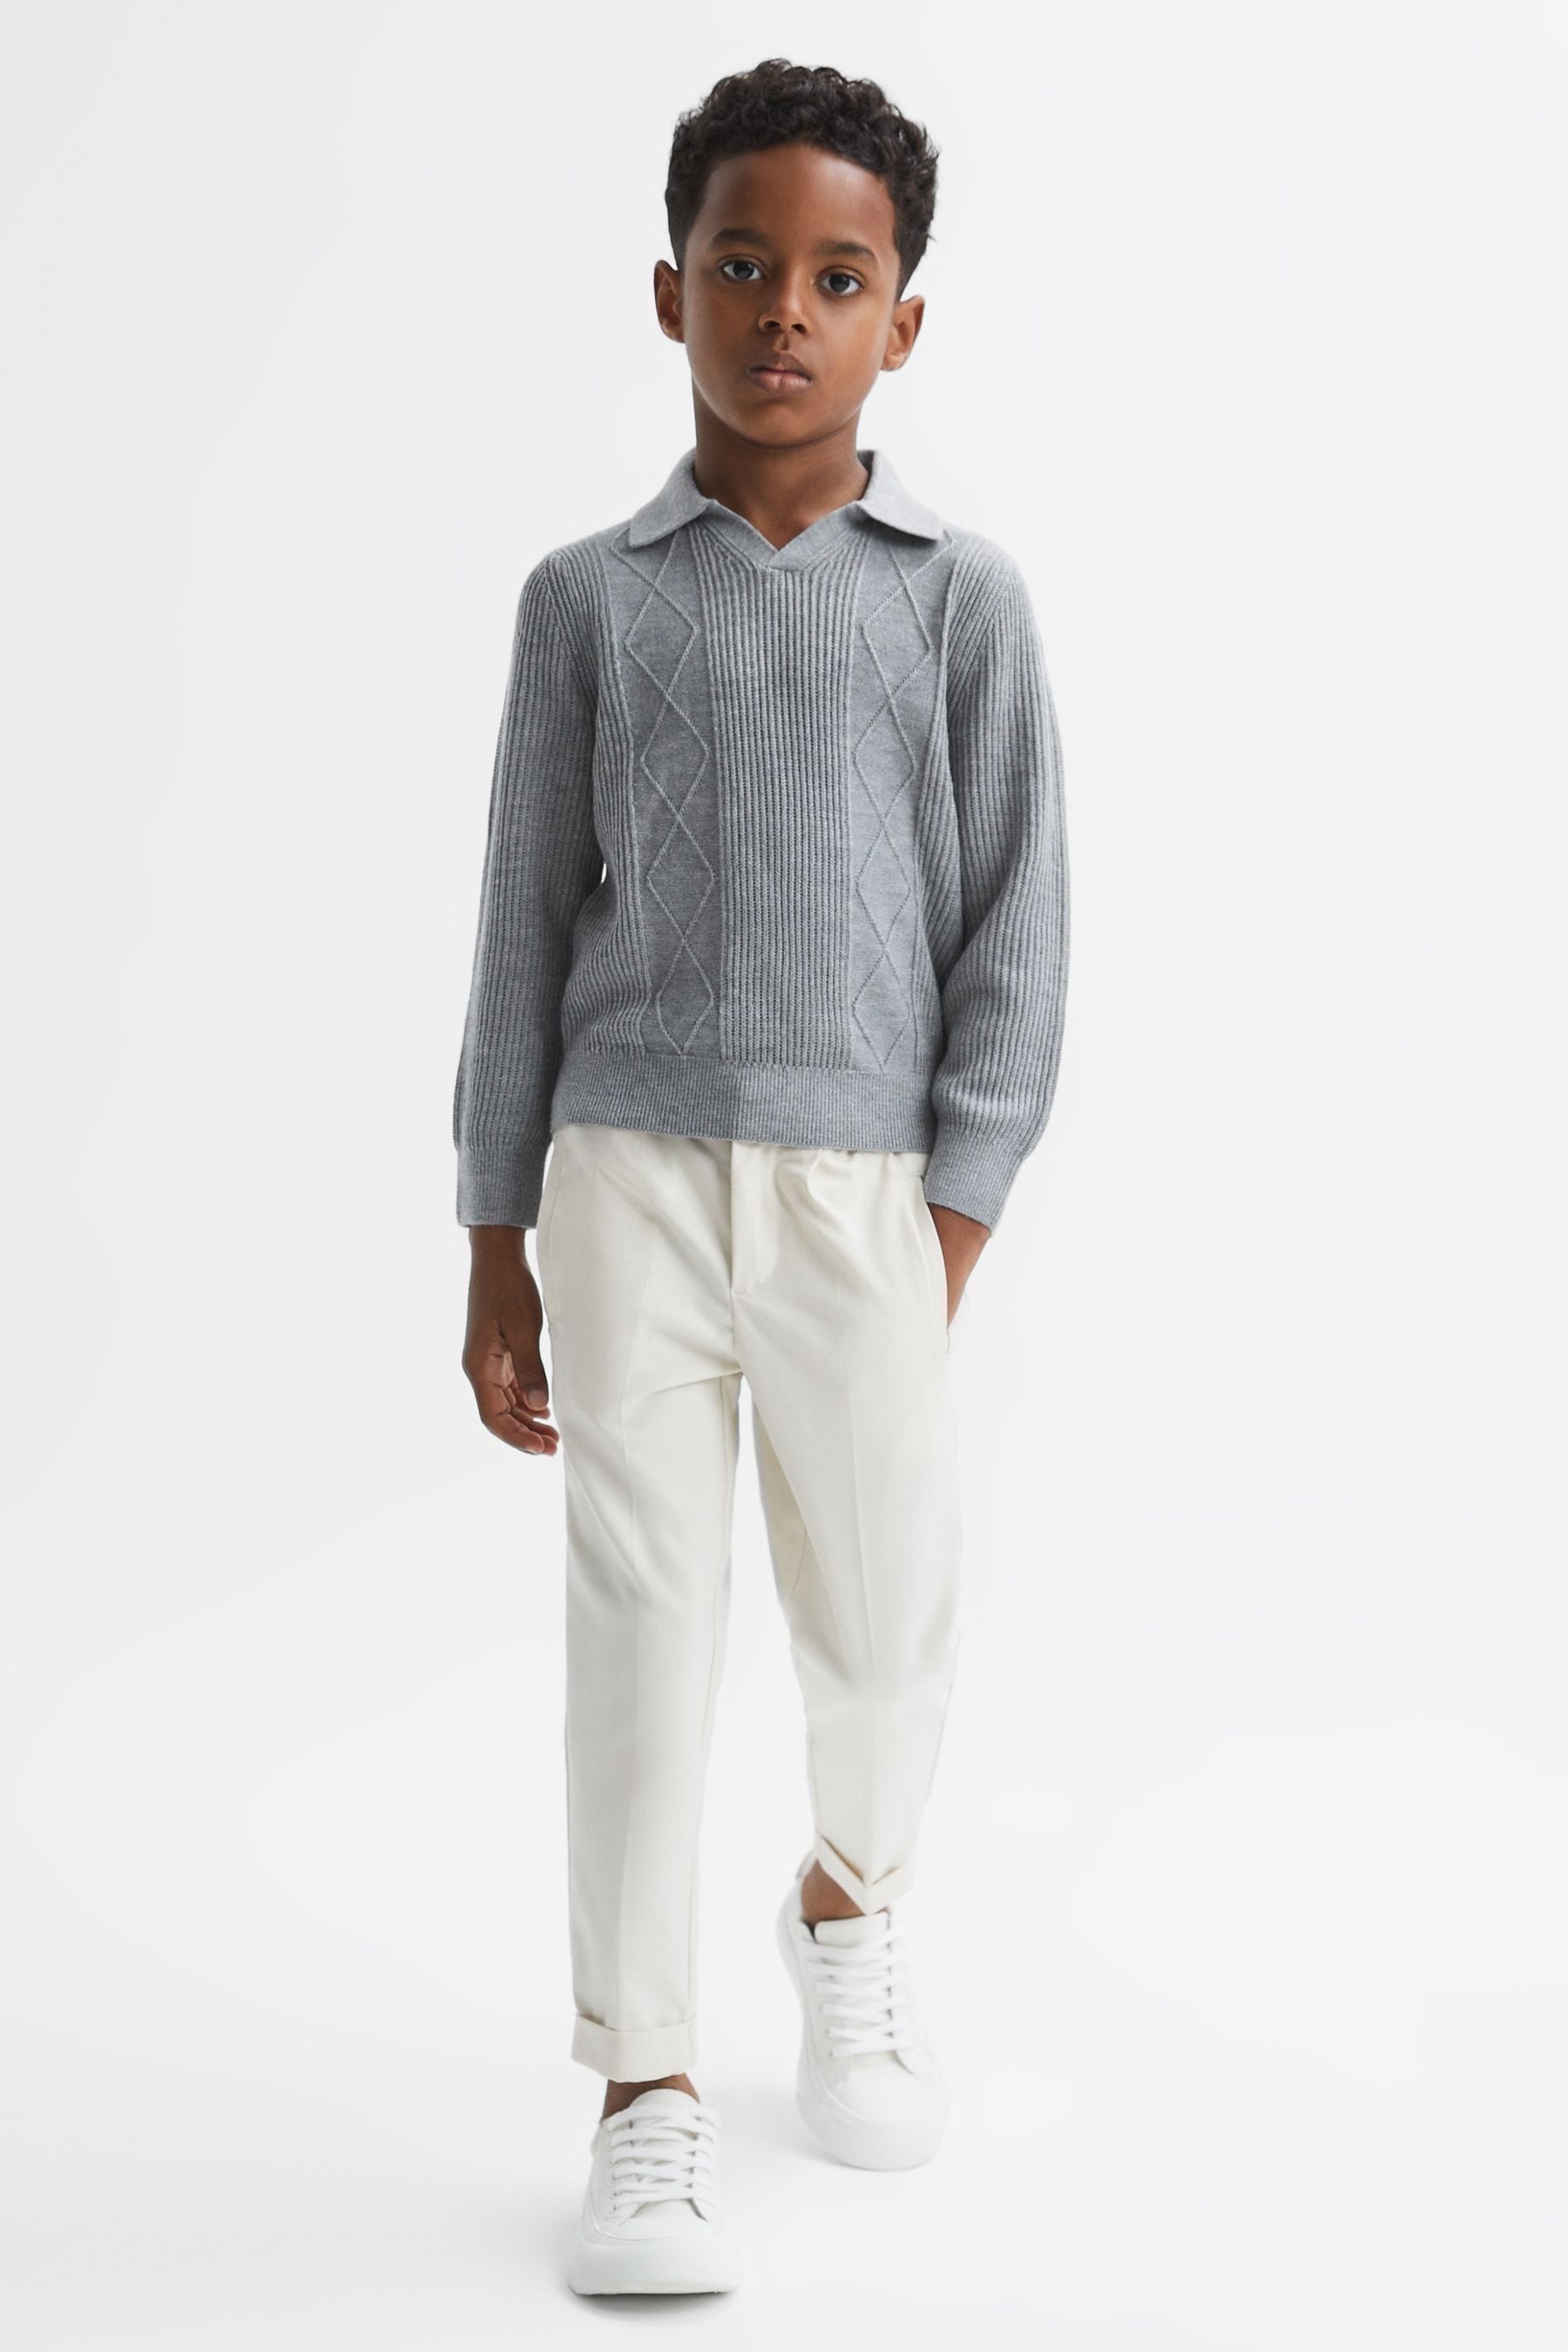 Reiss Kids' Malik - Soft Grey Melange Junior Knitted Open-collar Top, Age 3-4 Years